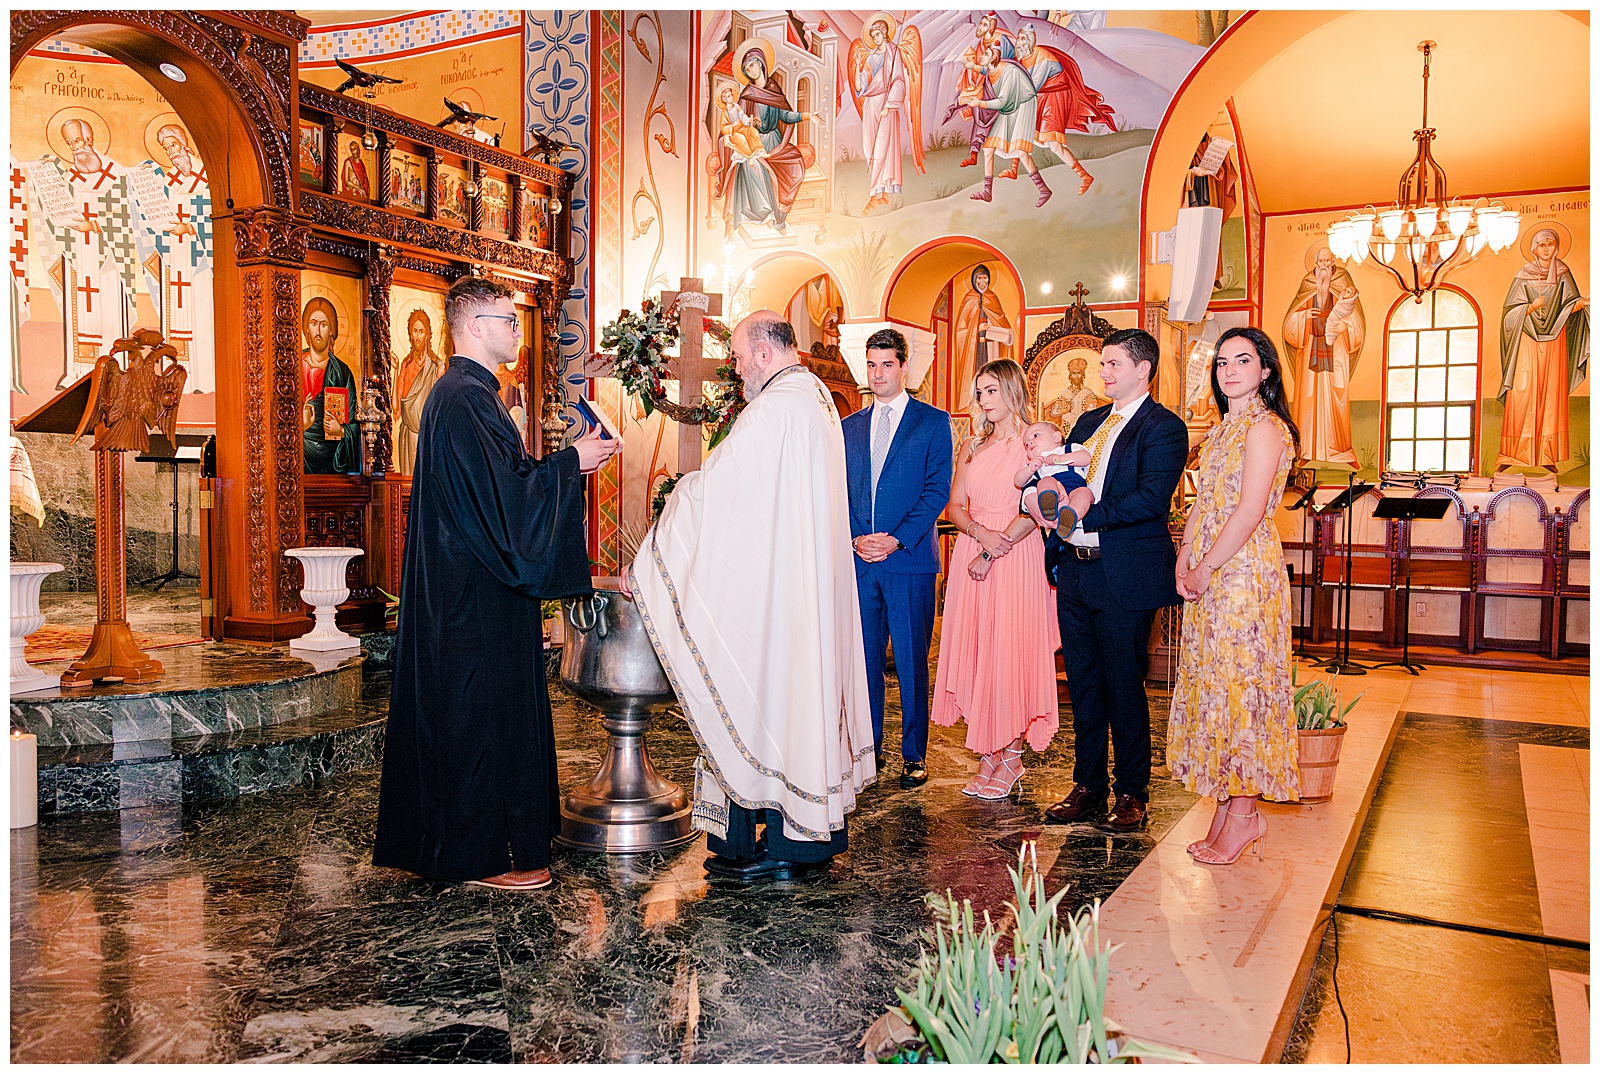 St-George-Greek-Orthodox-Church-Baptism.jpg